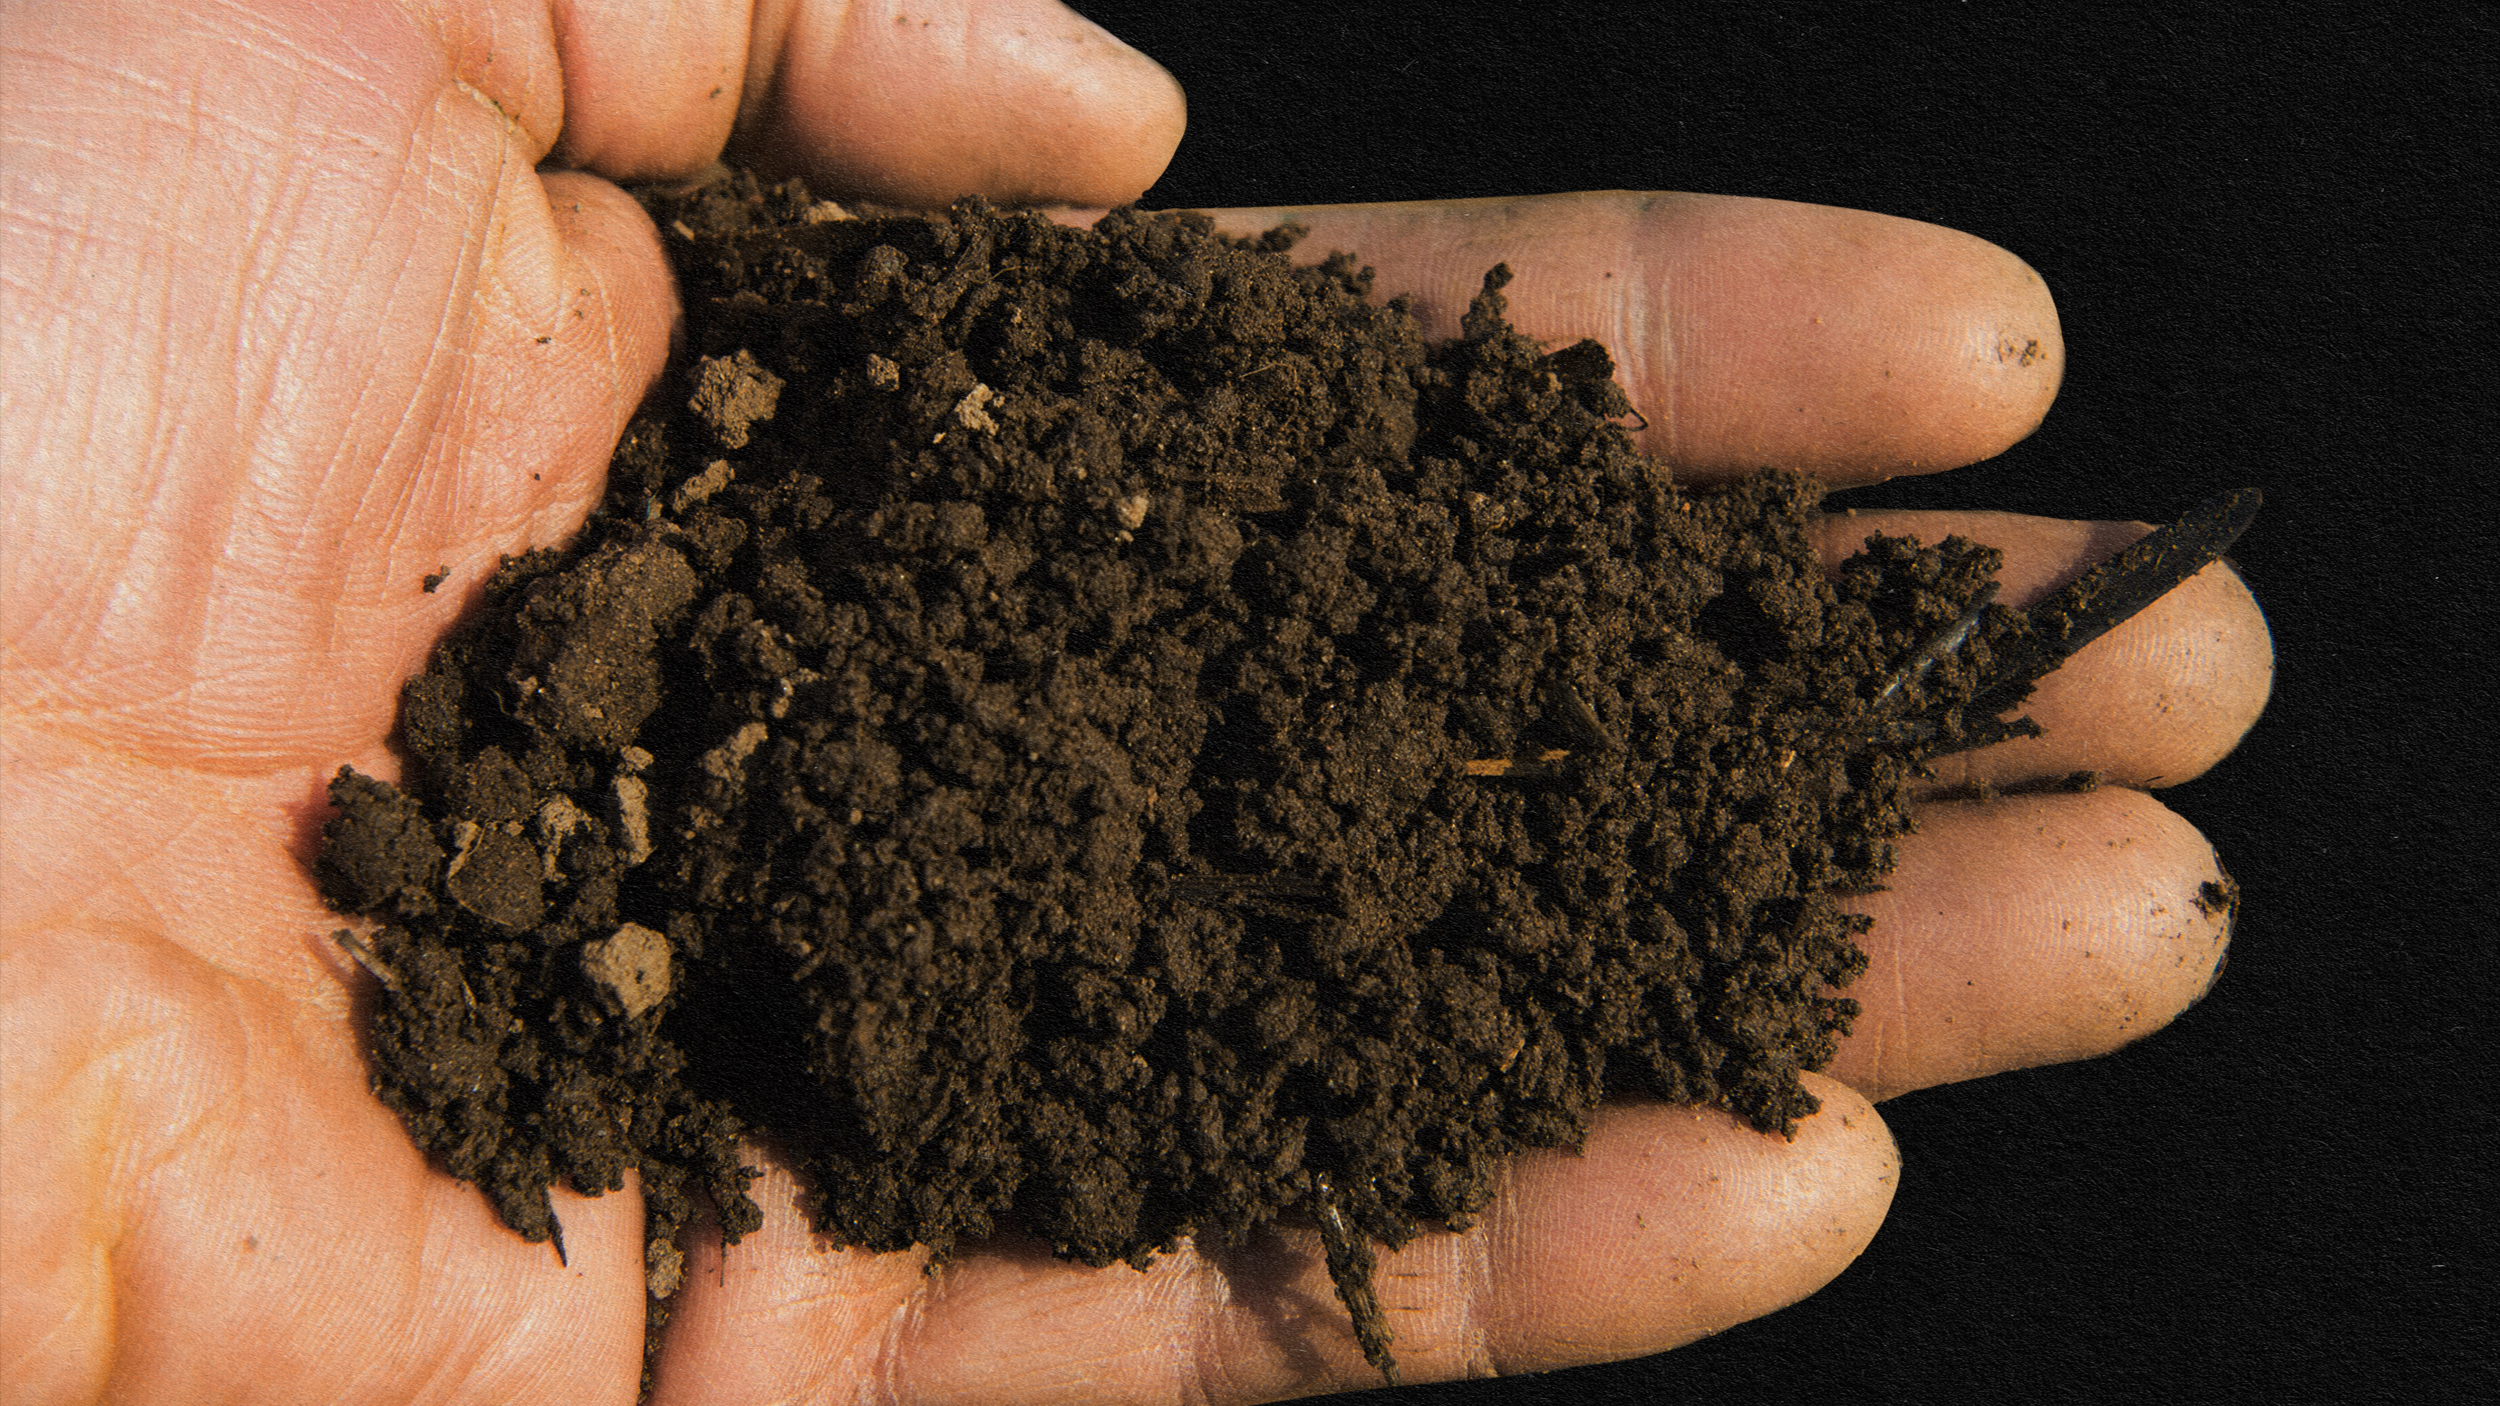 Eating Dirt Health Benefits - Study on Geophagy